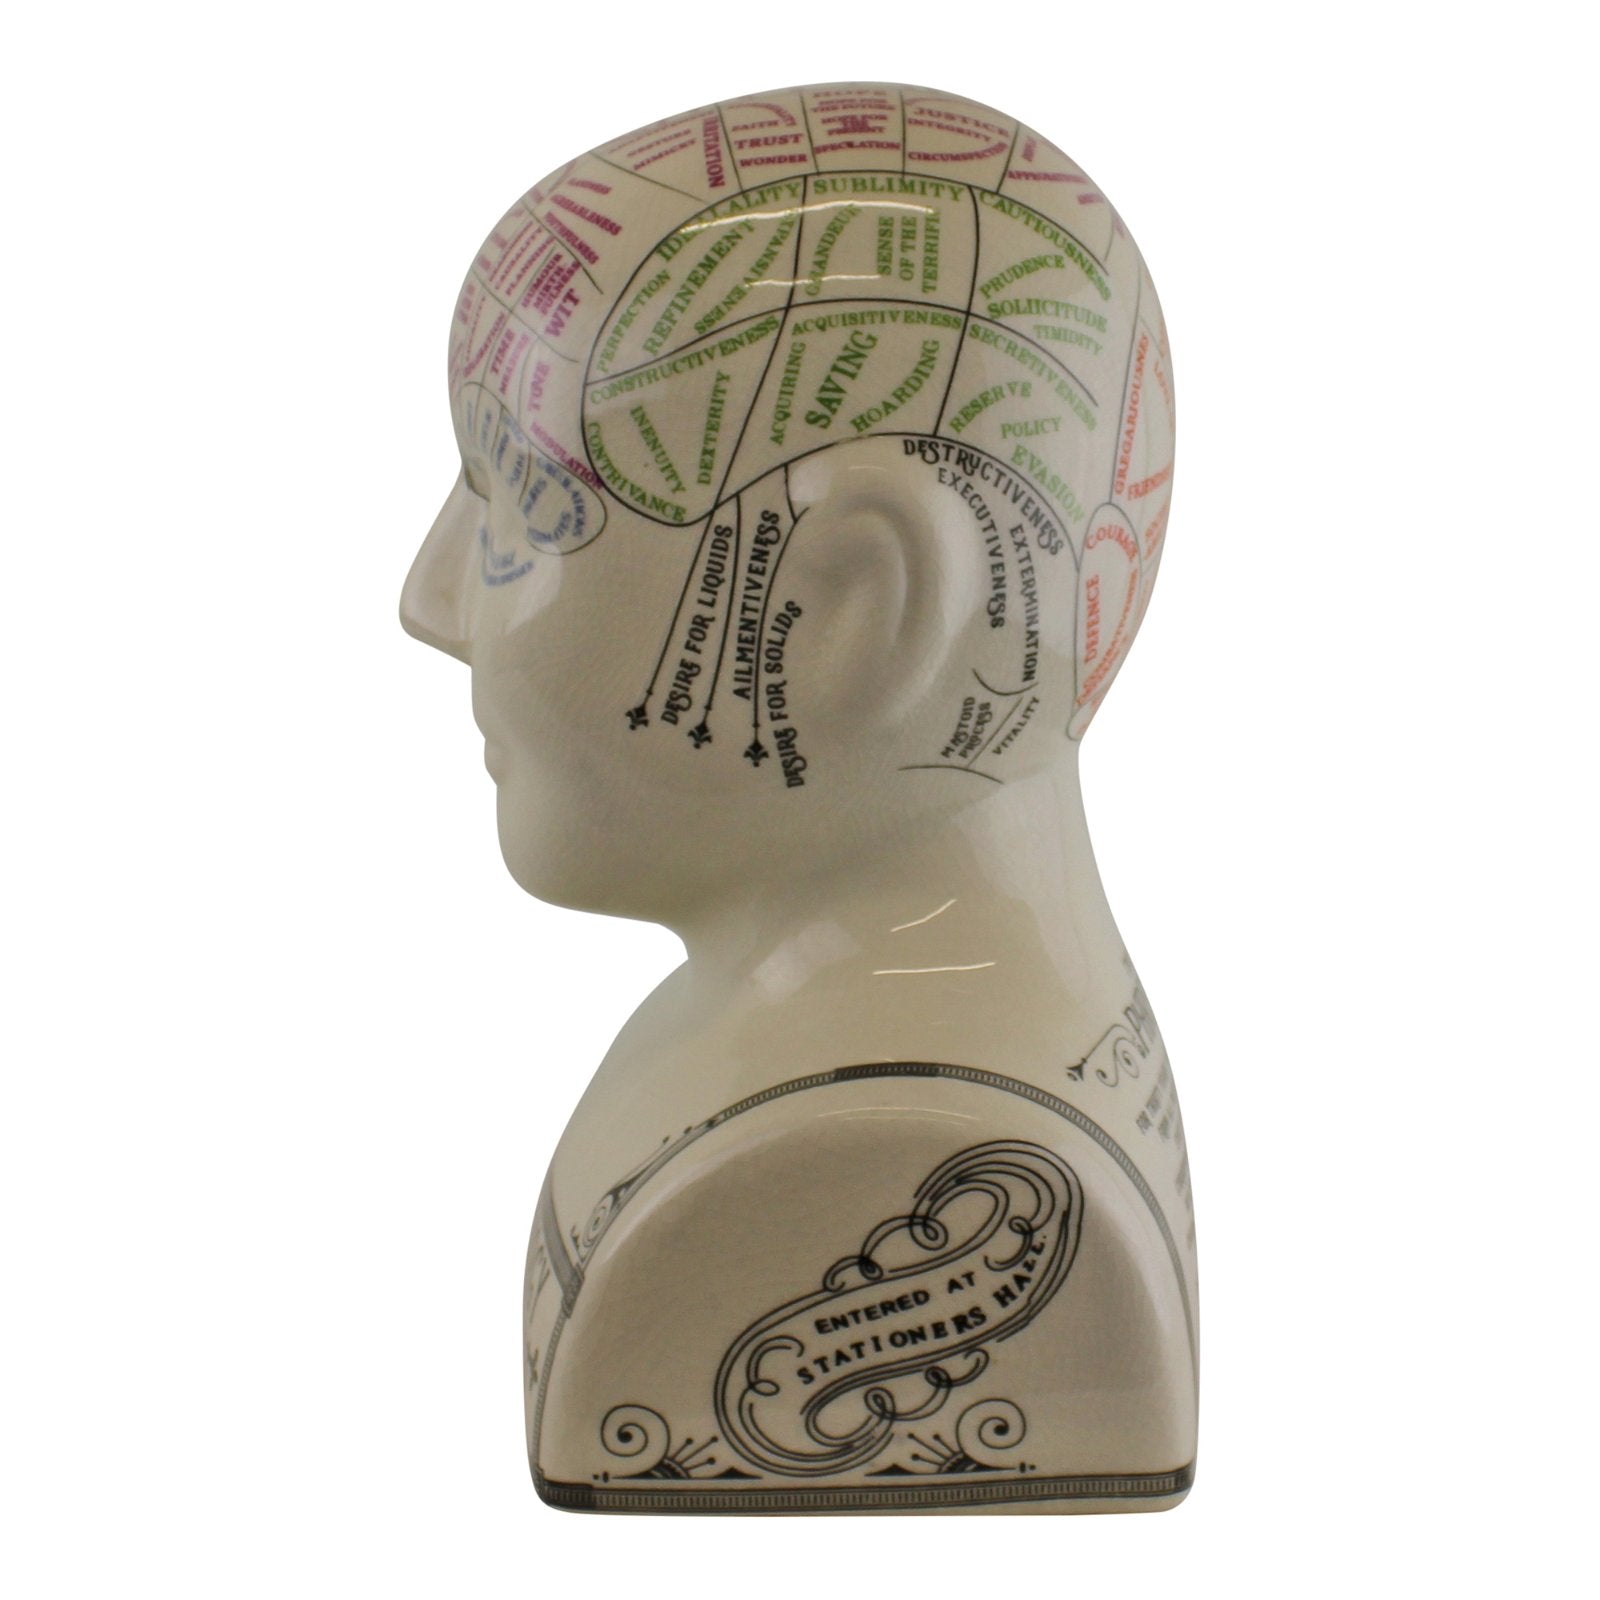 Large Ceramic Crackle Phrenology Head